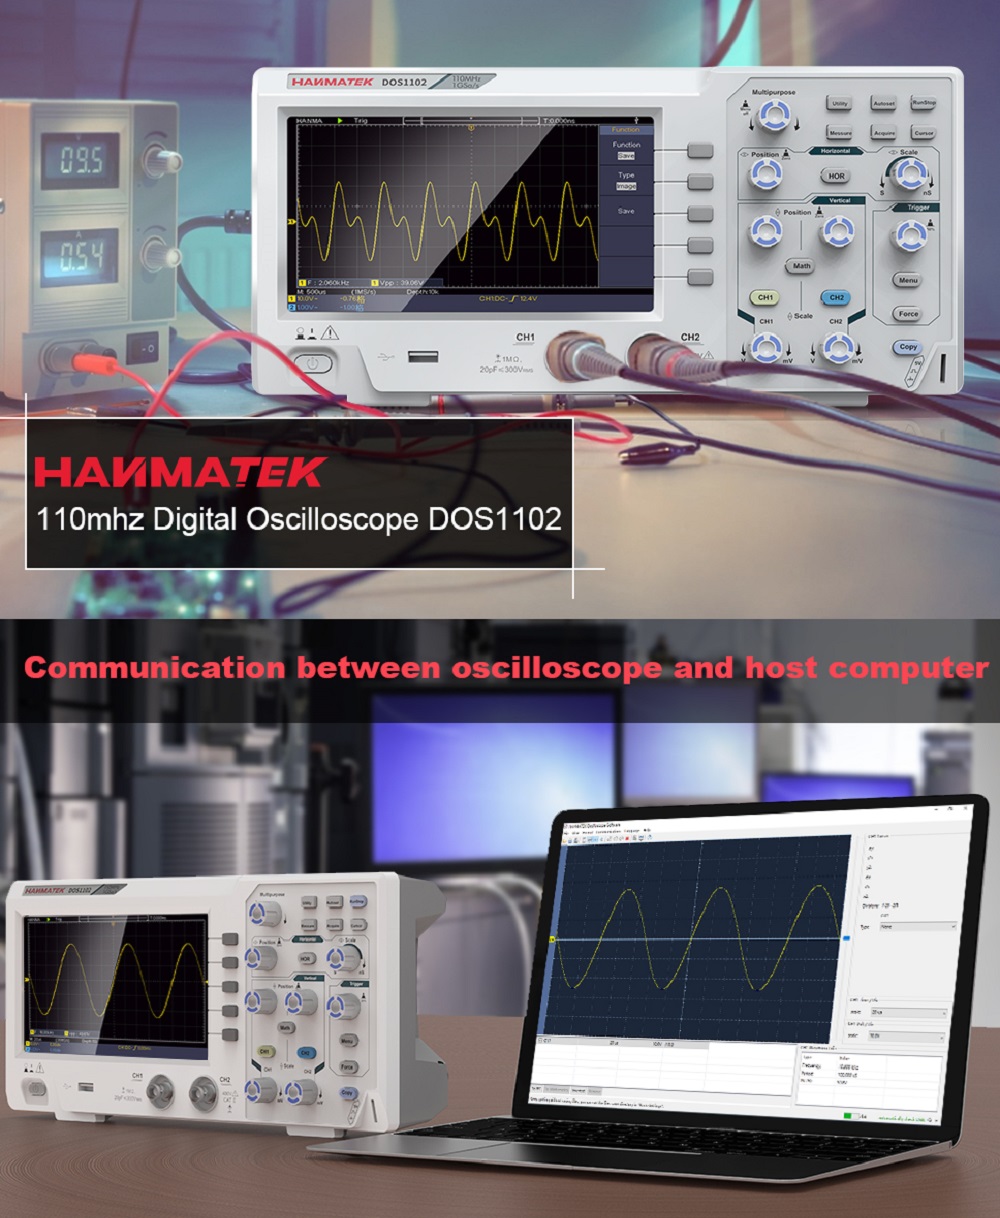 HANMAKET-DOS1102-110MHz-Digital-Oscilloscope-2channel-Oscillograph-1Gsas-7-Tft-LCD-Osciloscope-Kit-B-1682440-1